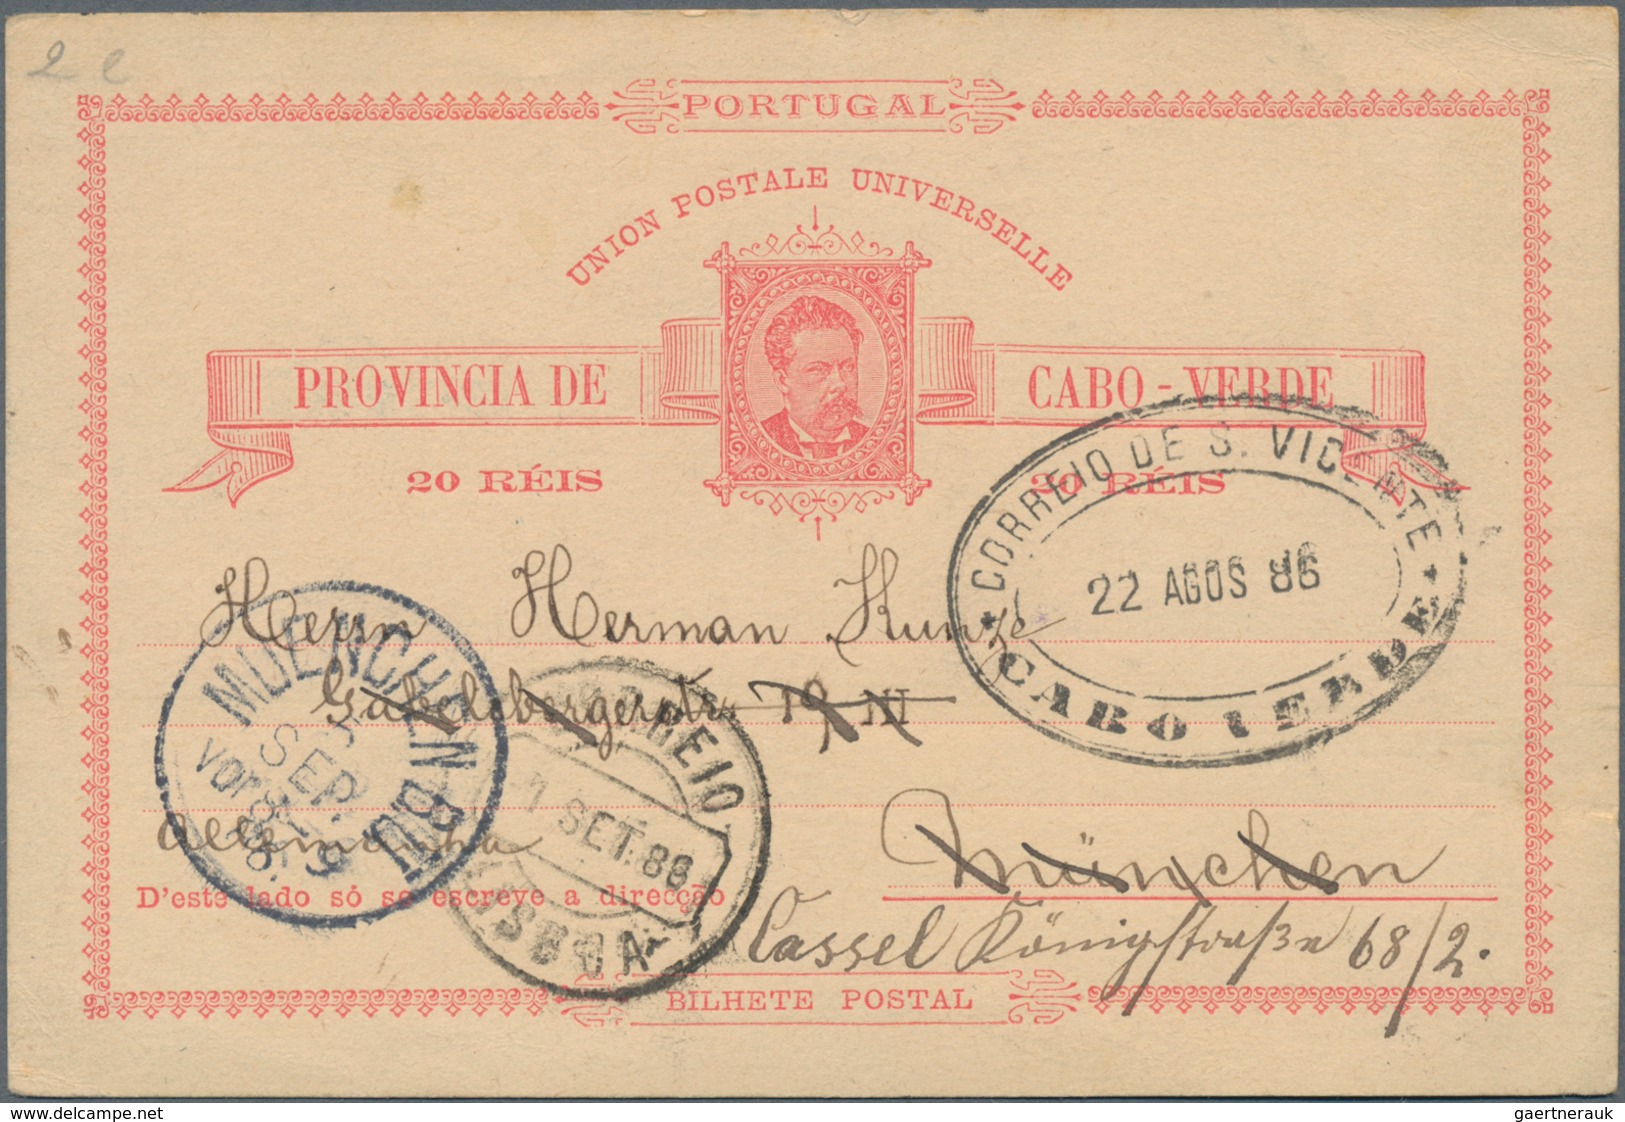 Kap Verde: 1886, 20 R. Stationery Card With Oval "CORREO DE S. VICENTE" Mark Sent Via Lisboa To Muni - Kap Verde